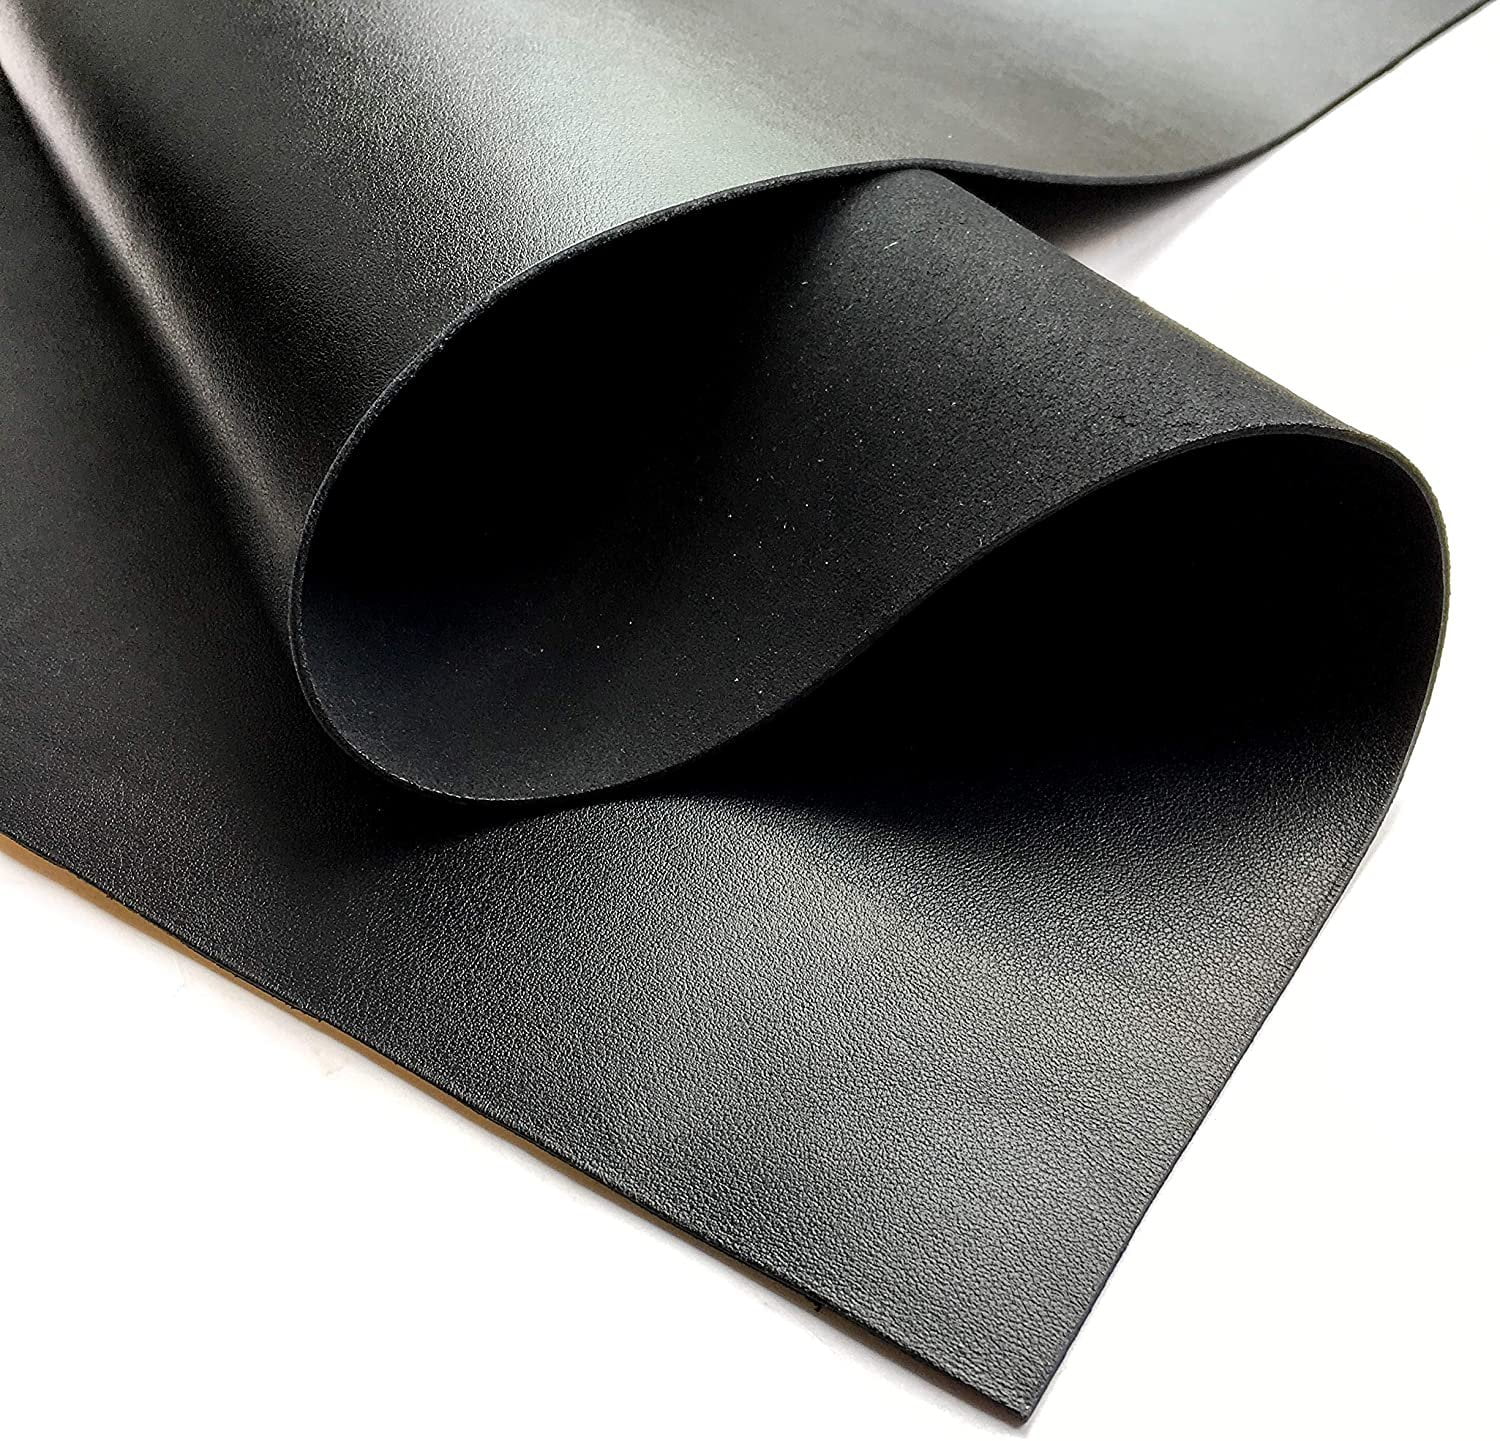 Real Genuine Black Calf Hide Leather: Thick Leather Cow Hide Black Leather Sheets for Crafting and Cricut Maker Supplies (Black, 12x12In/ 30x30cm)